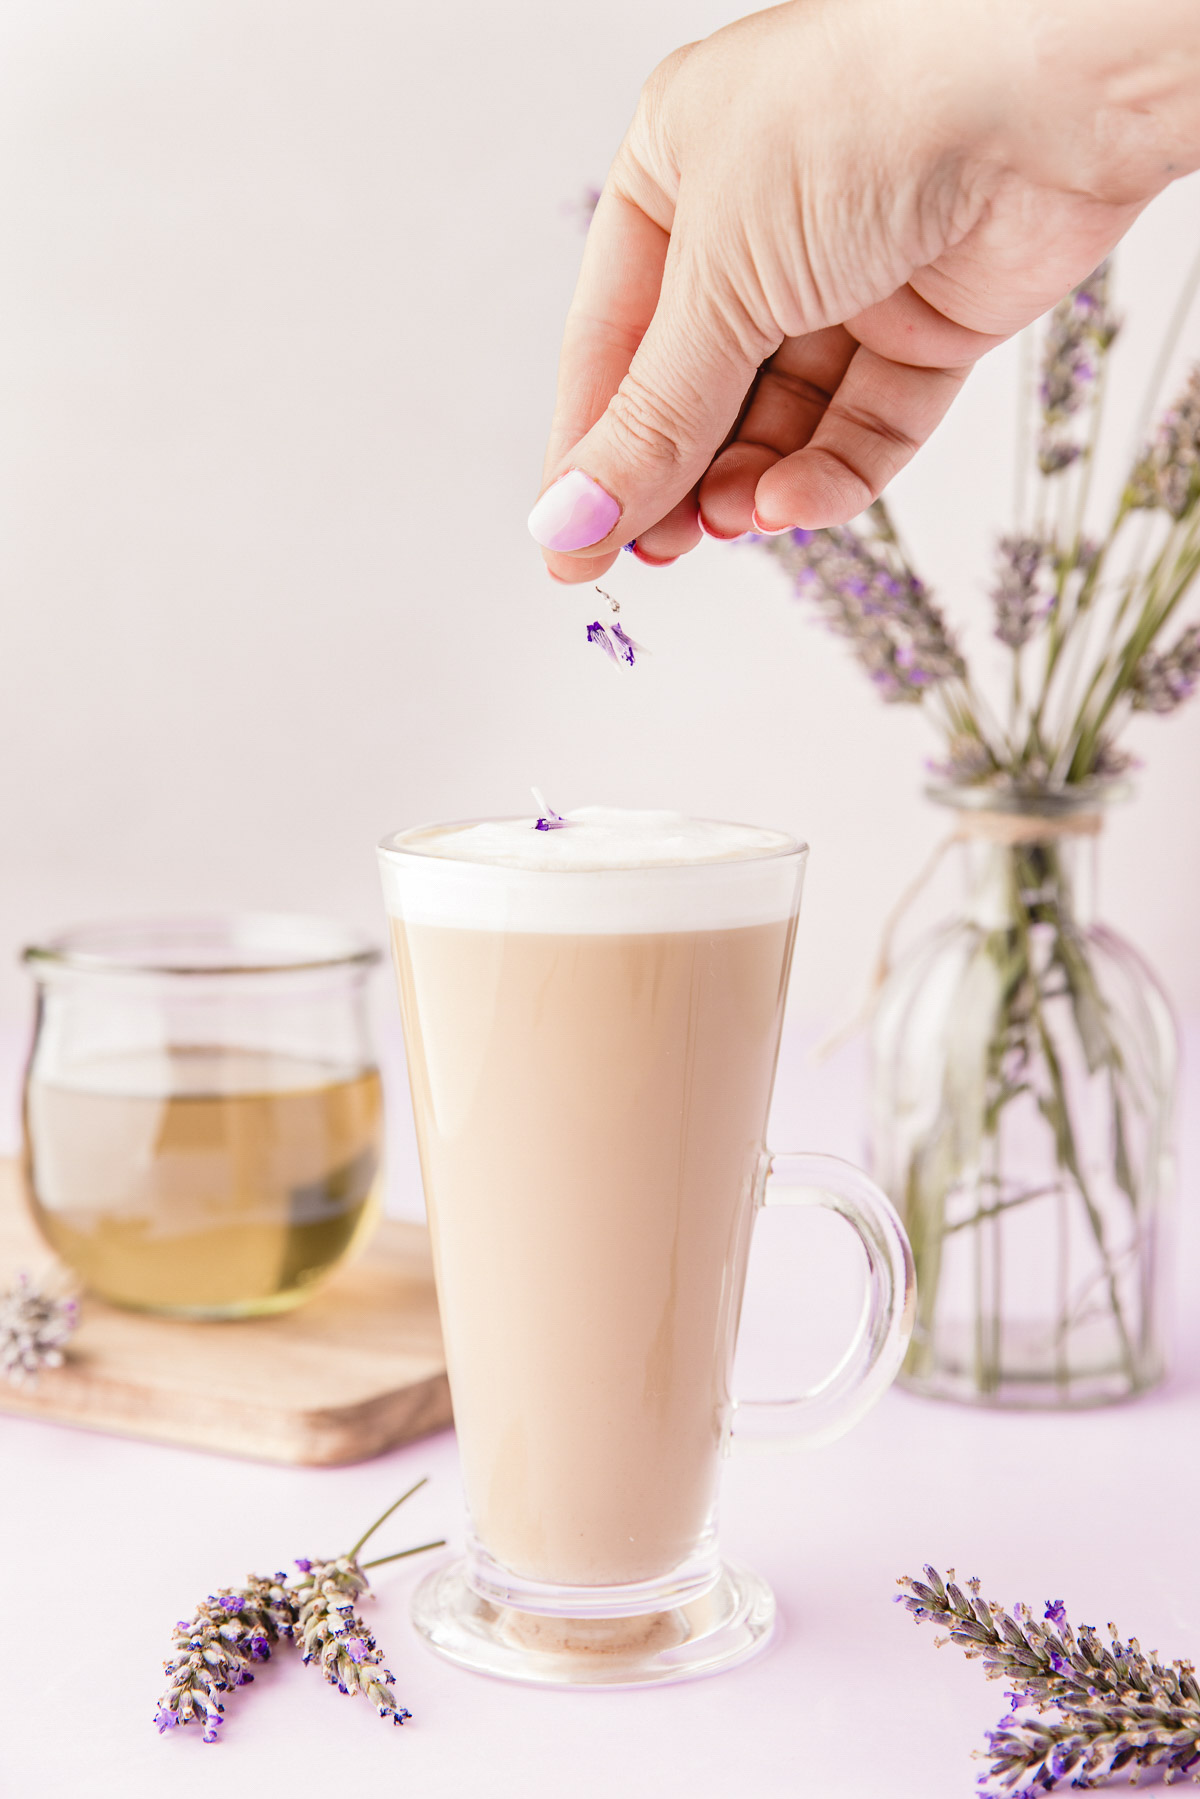 Lavender buds being sprinkled on the top of a lavender latte.